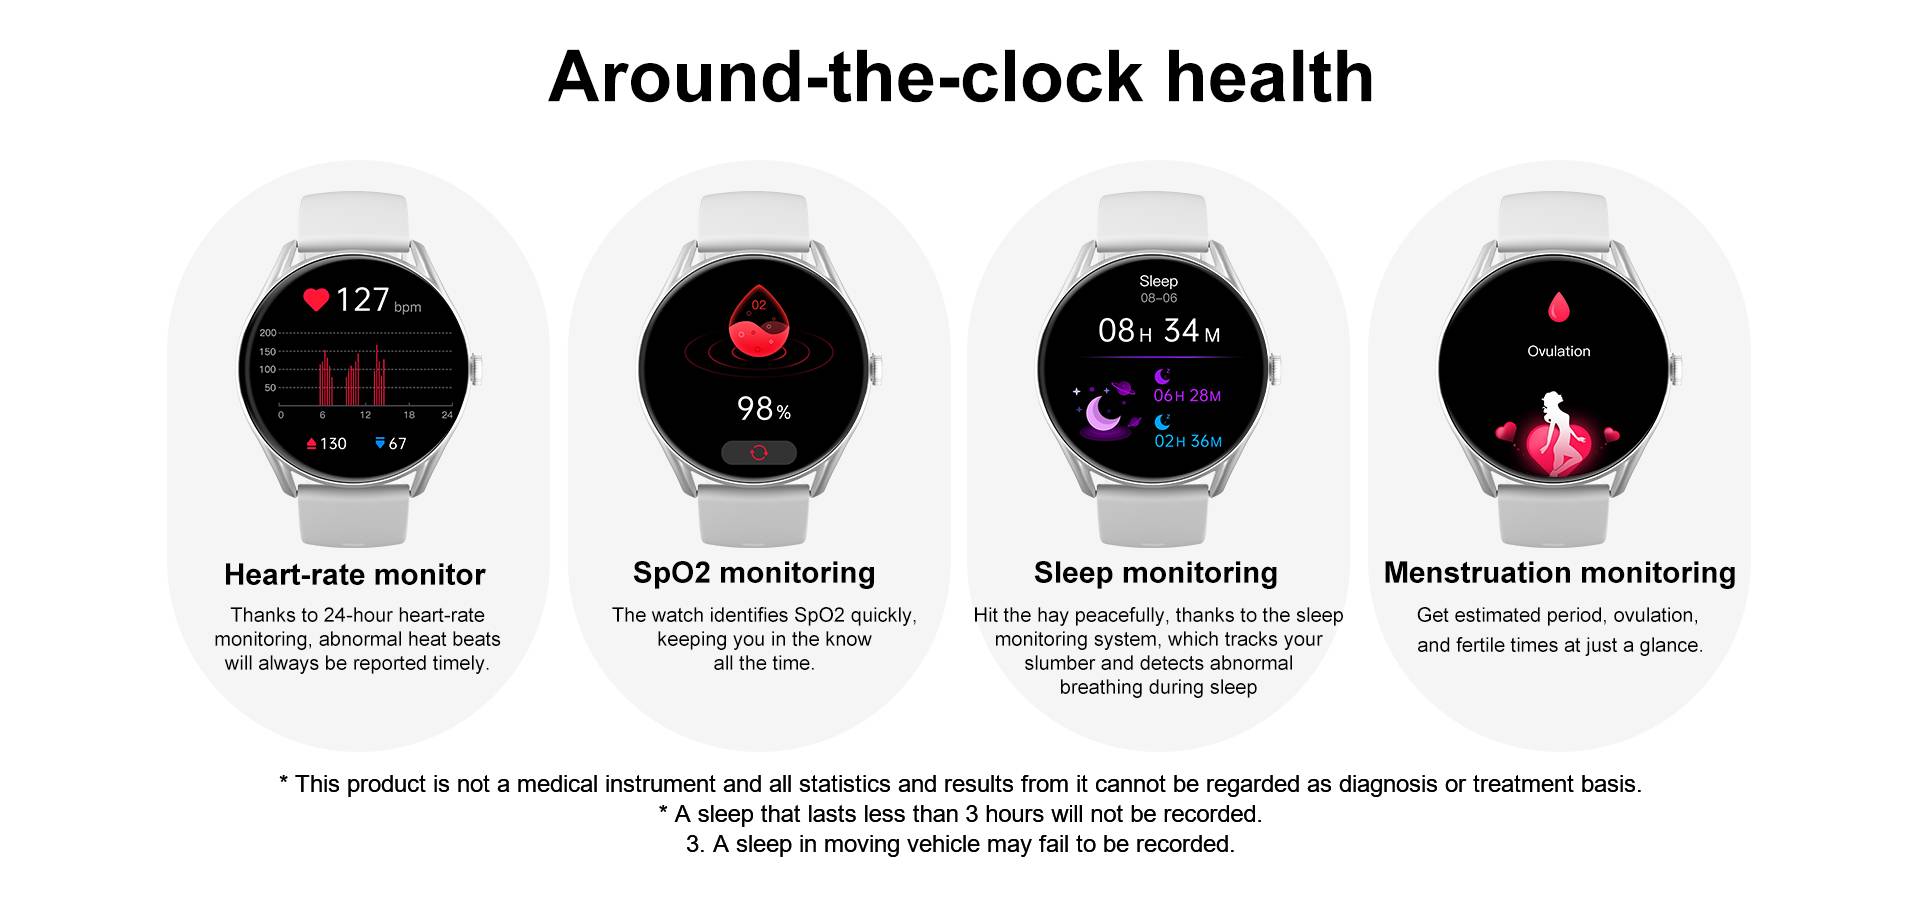 Around-the-clock health